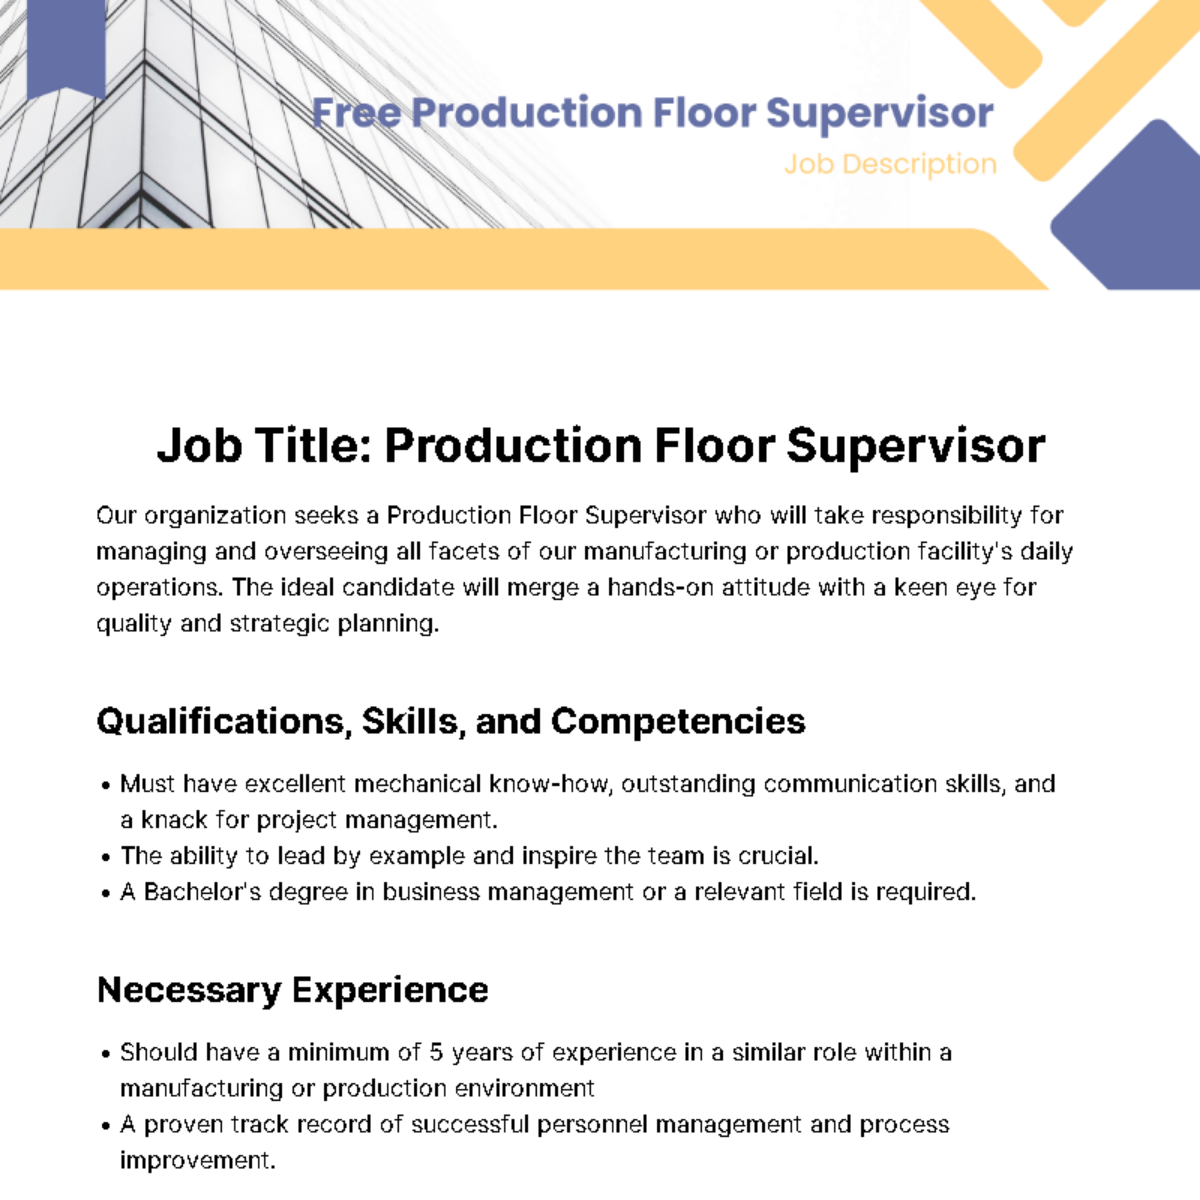 Free Production Floor Supervisor Job Description Template